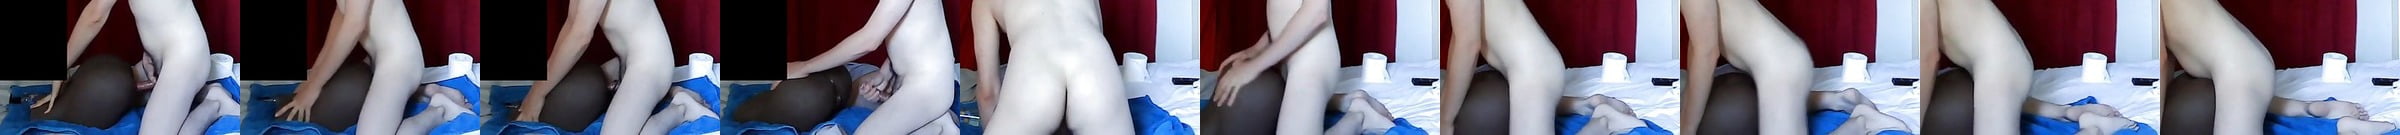 Sex Toys For Men Porn Videos XHamster